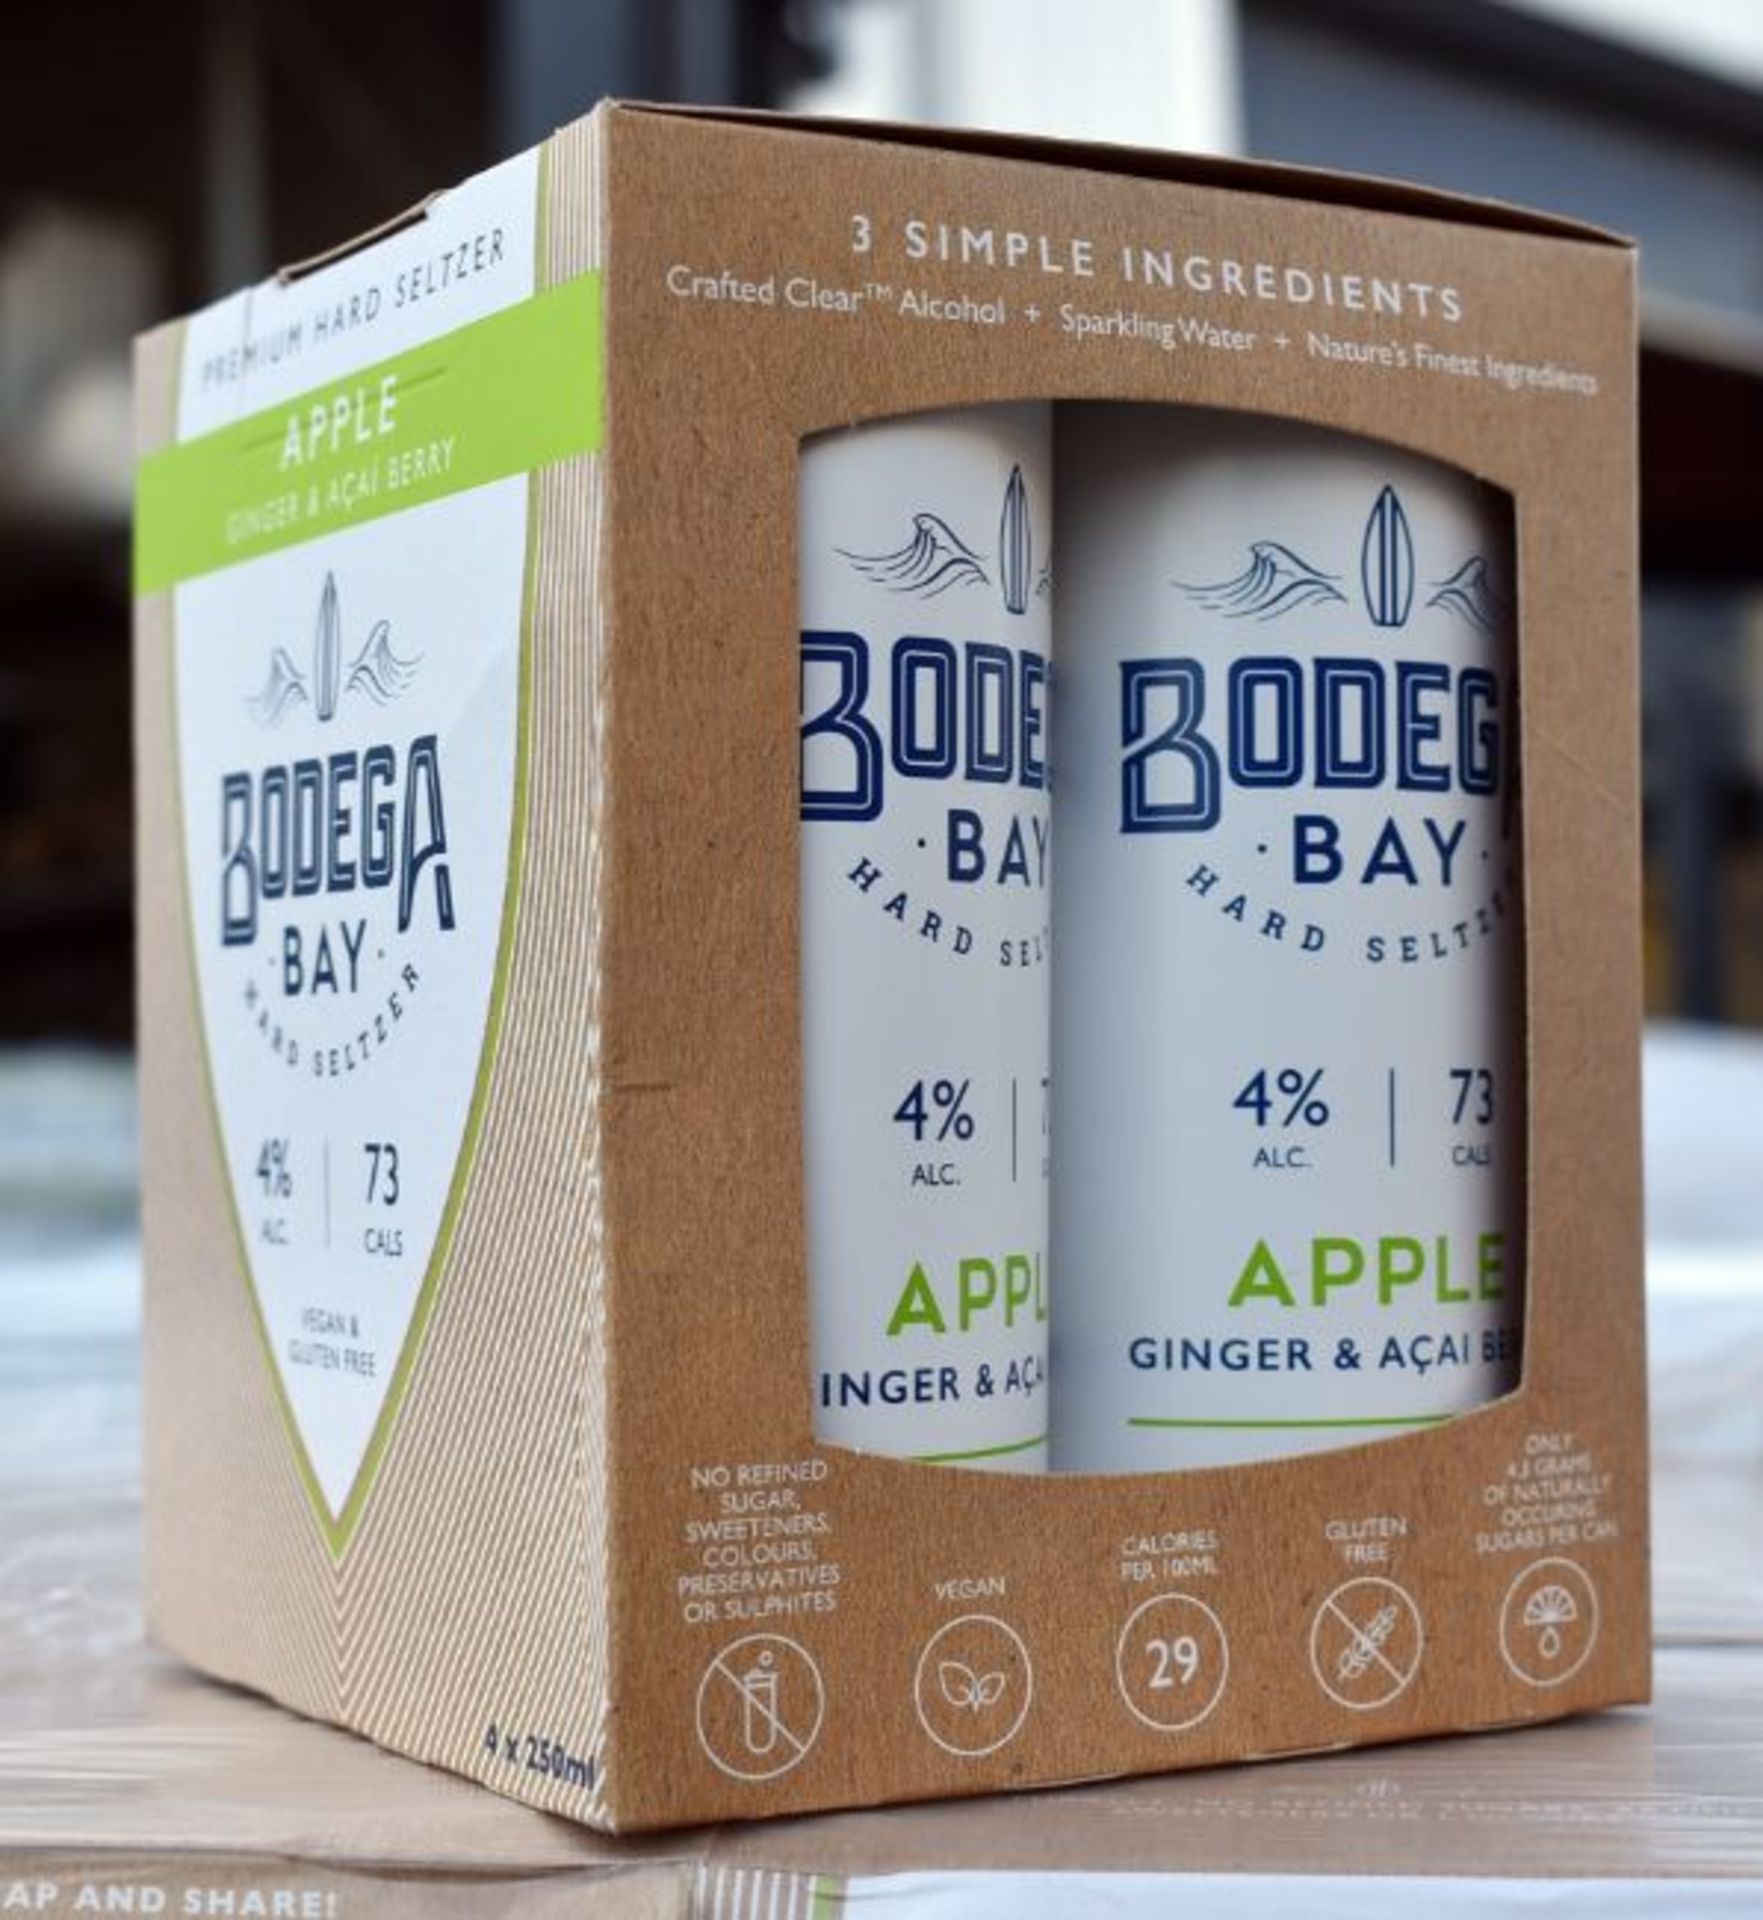 24 x Bodega Bay Hard Seltzer 250ml Alcoholic Sparkling Water Drinks - Apple Ginger & Acai Berry - Image 8 of 9